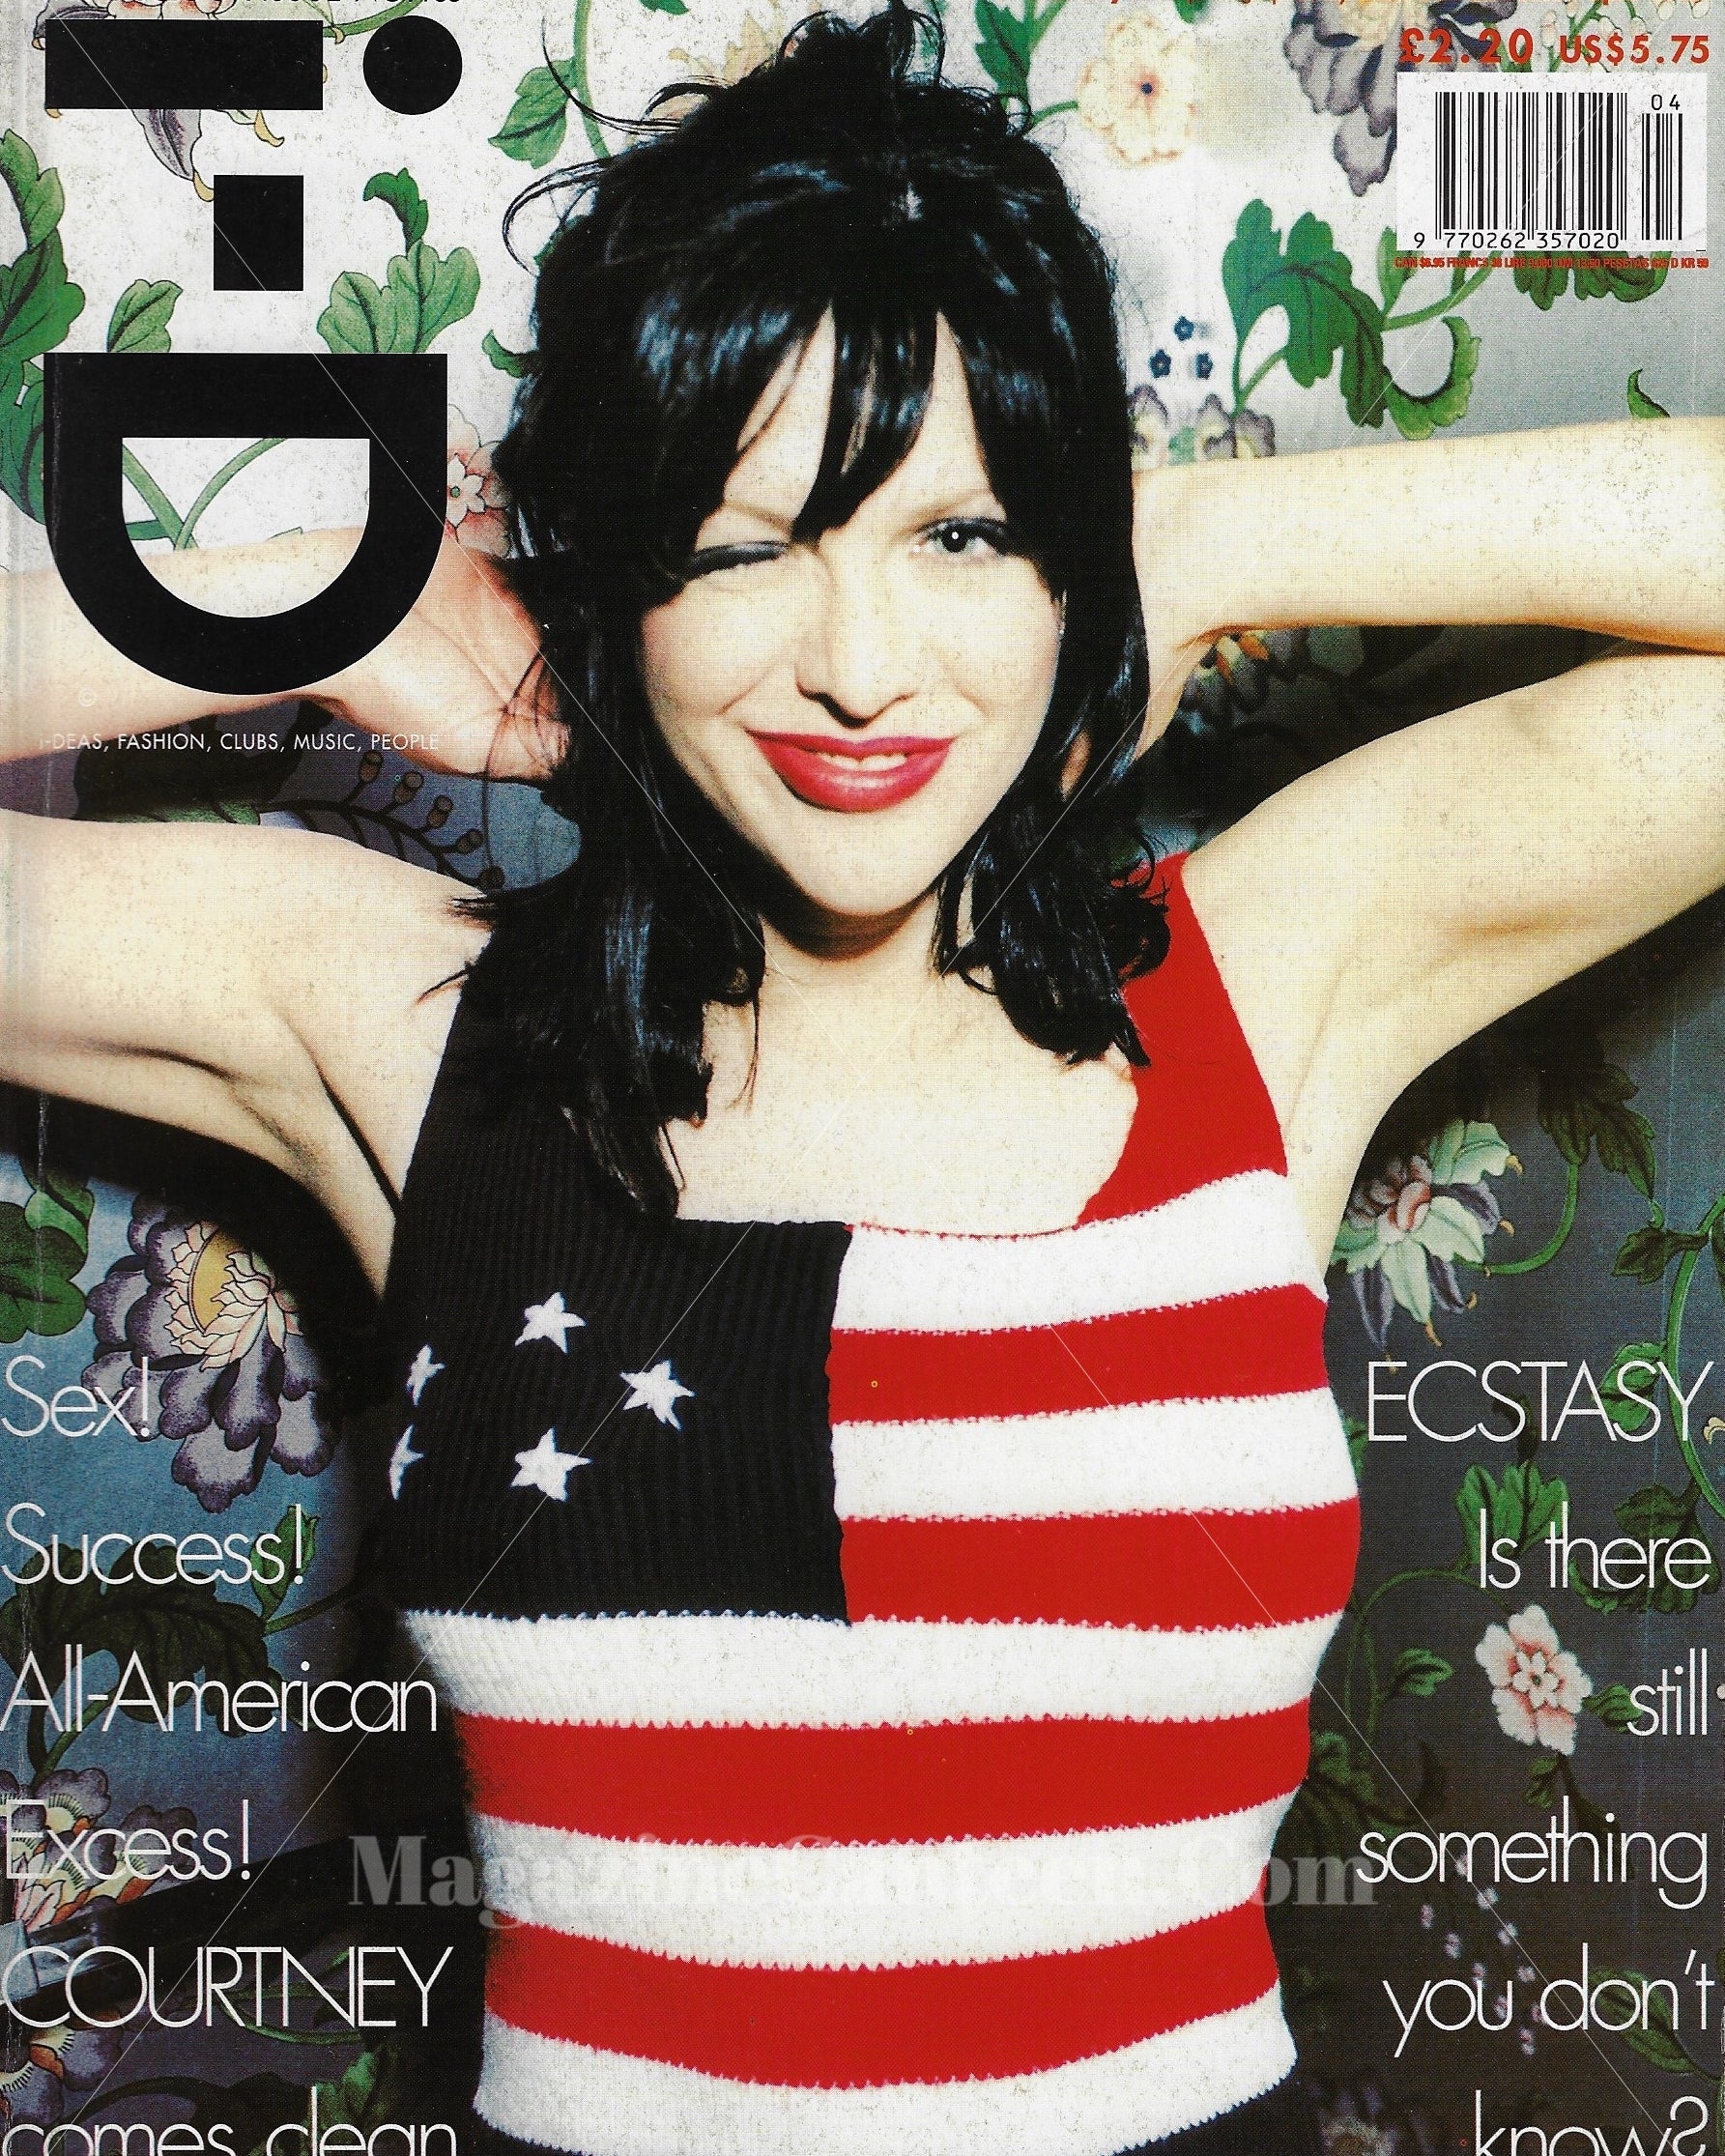 I-D Magazine 163 - Courtney Love 1997